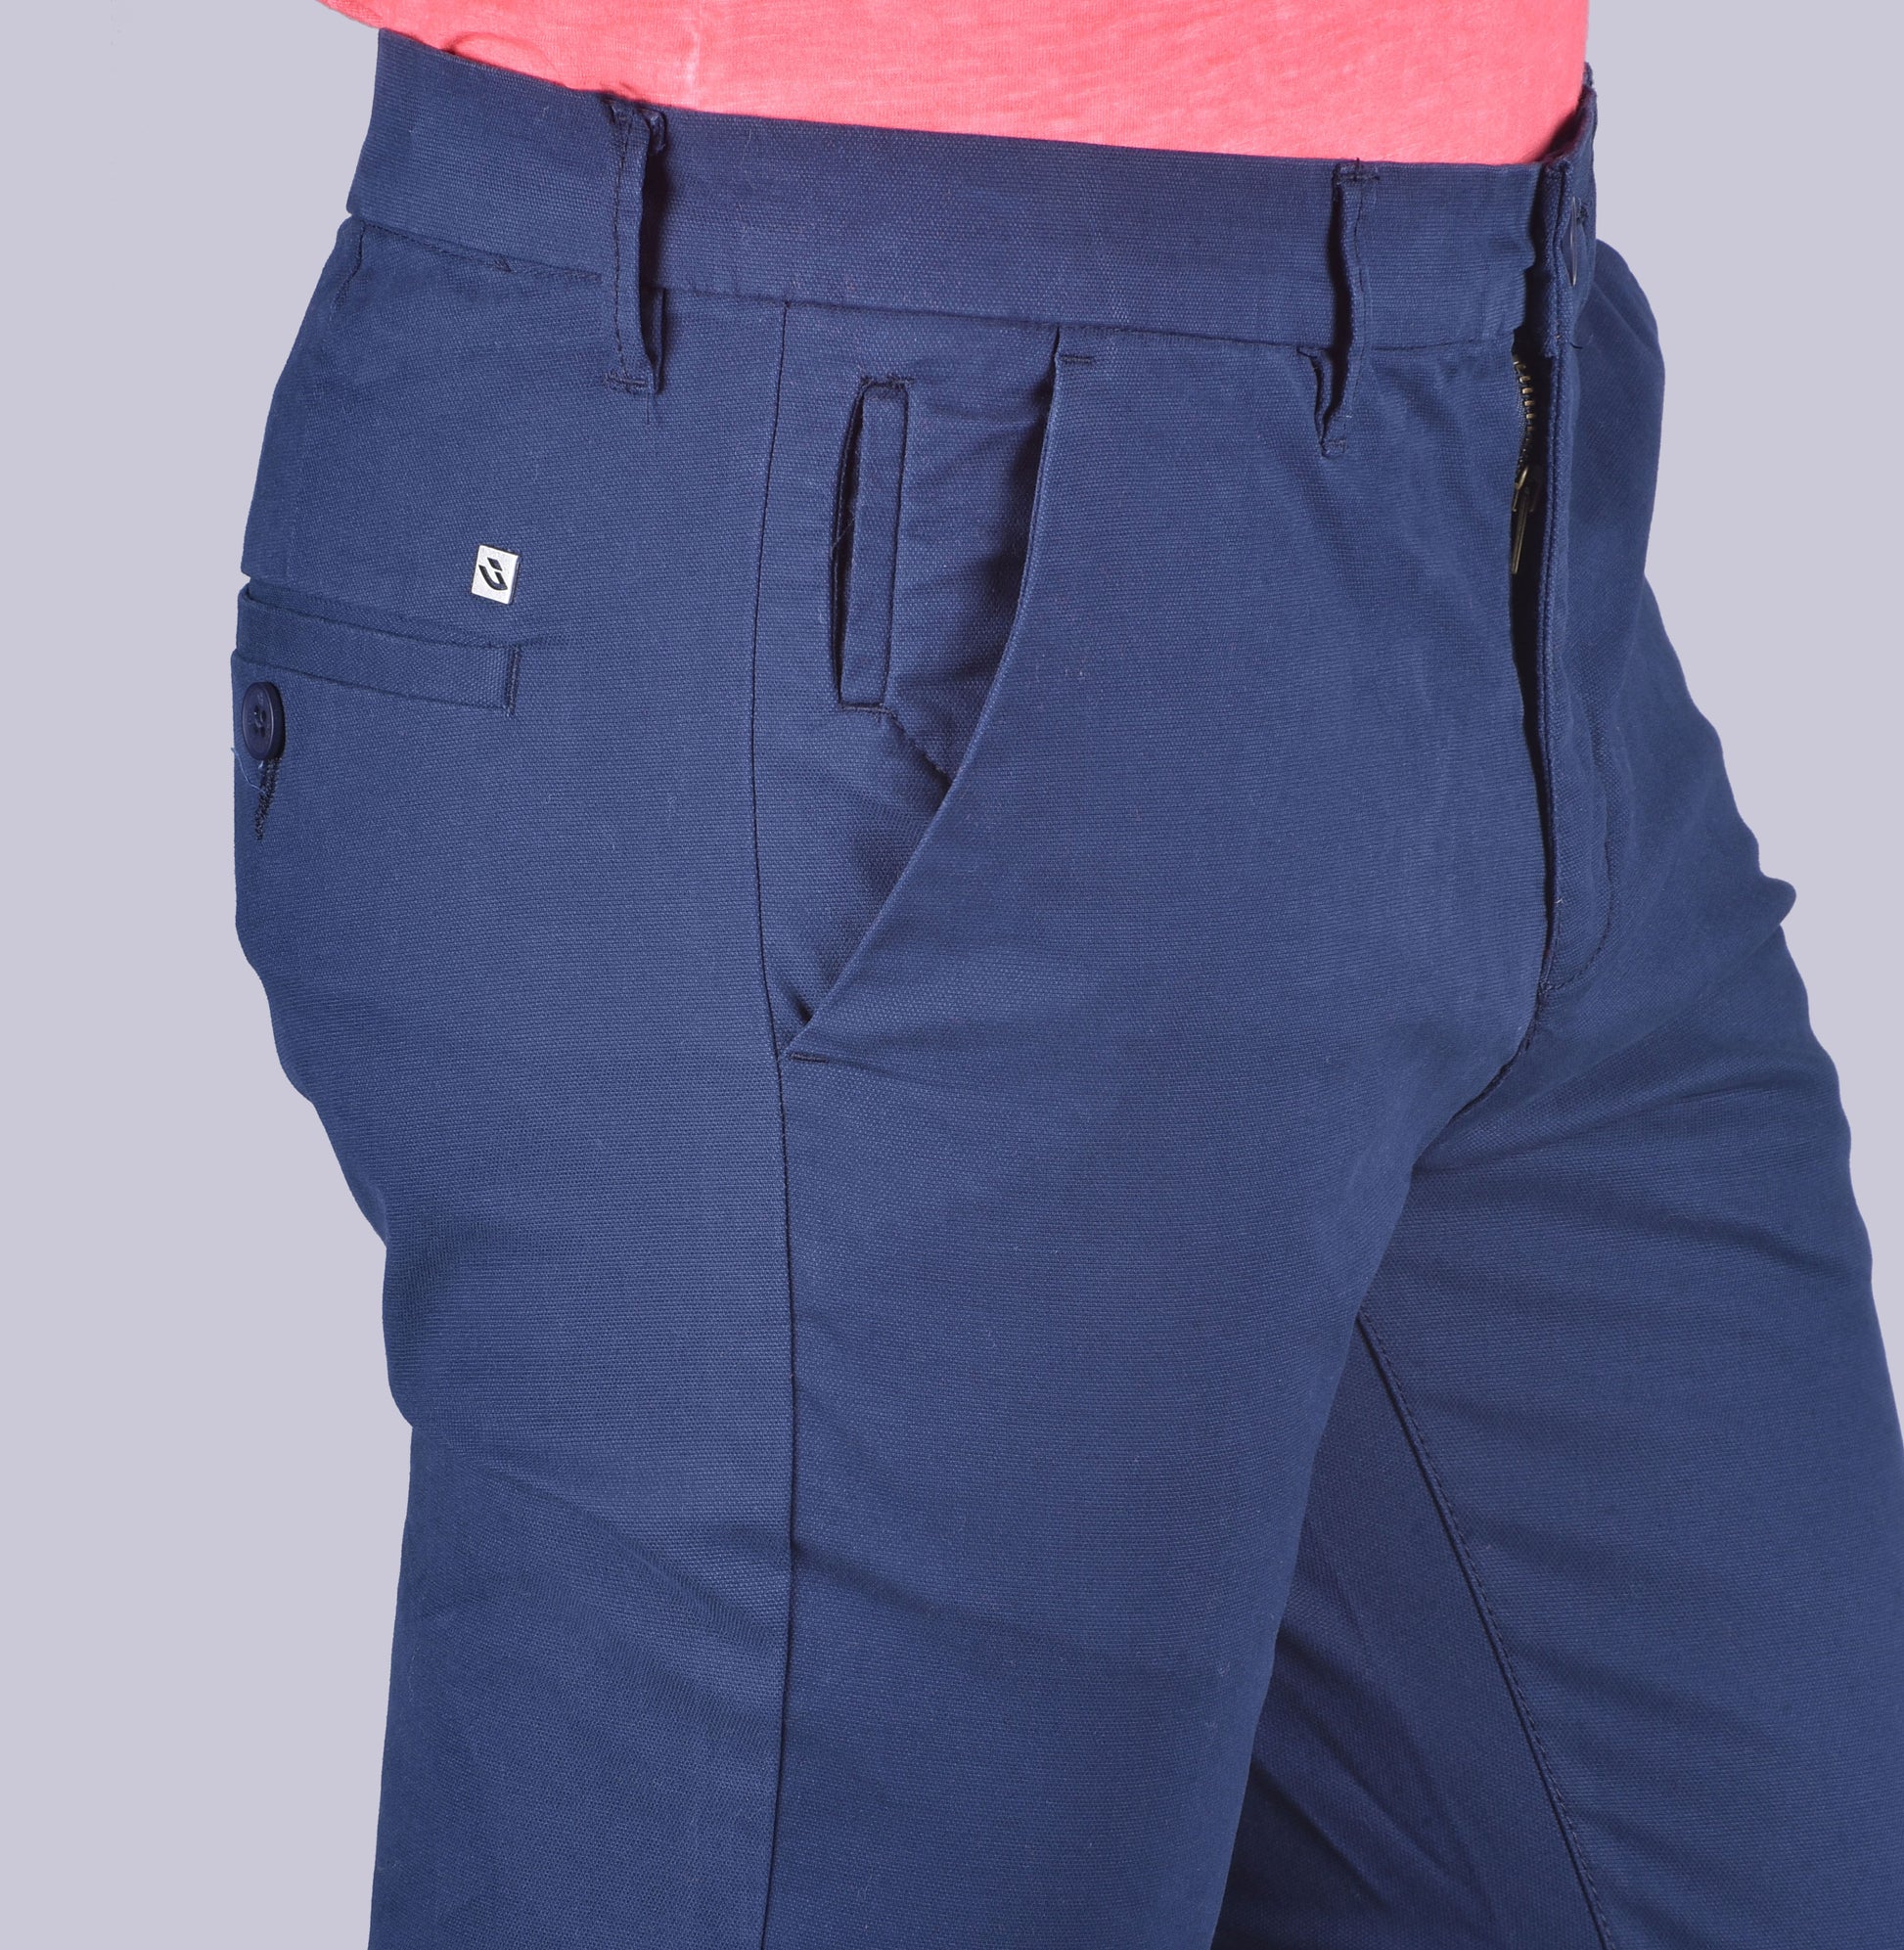 Blue contour fit trousers. - urban clothing co.